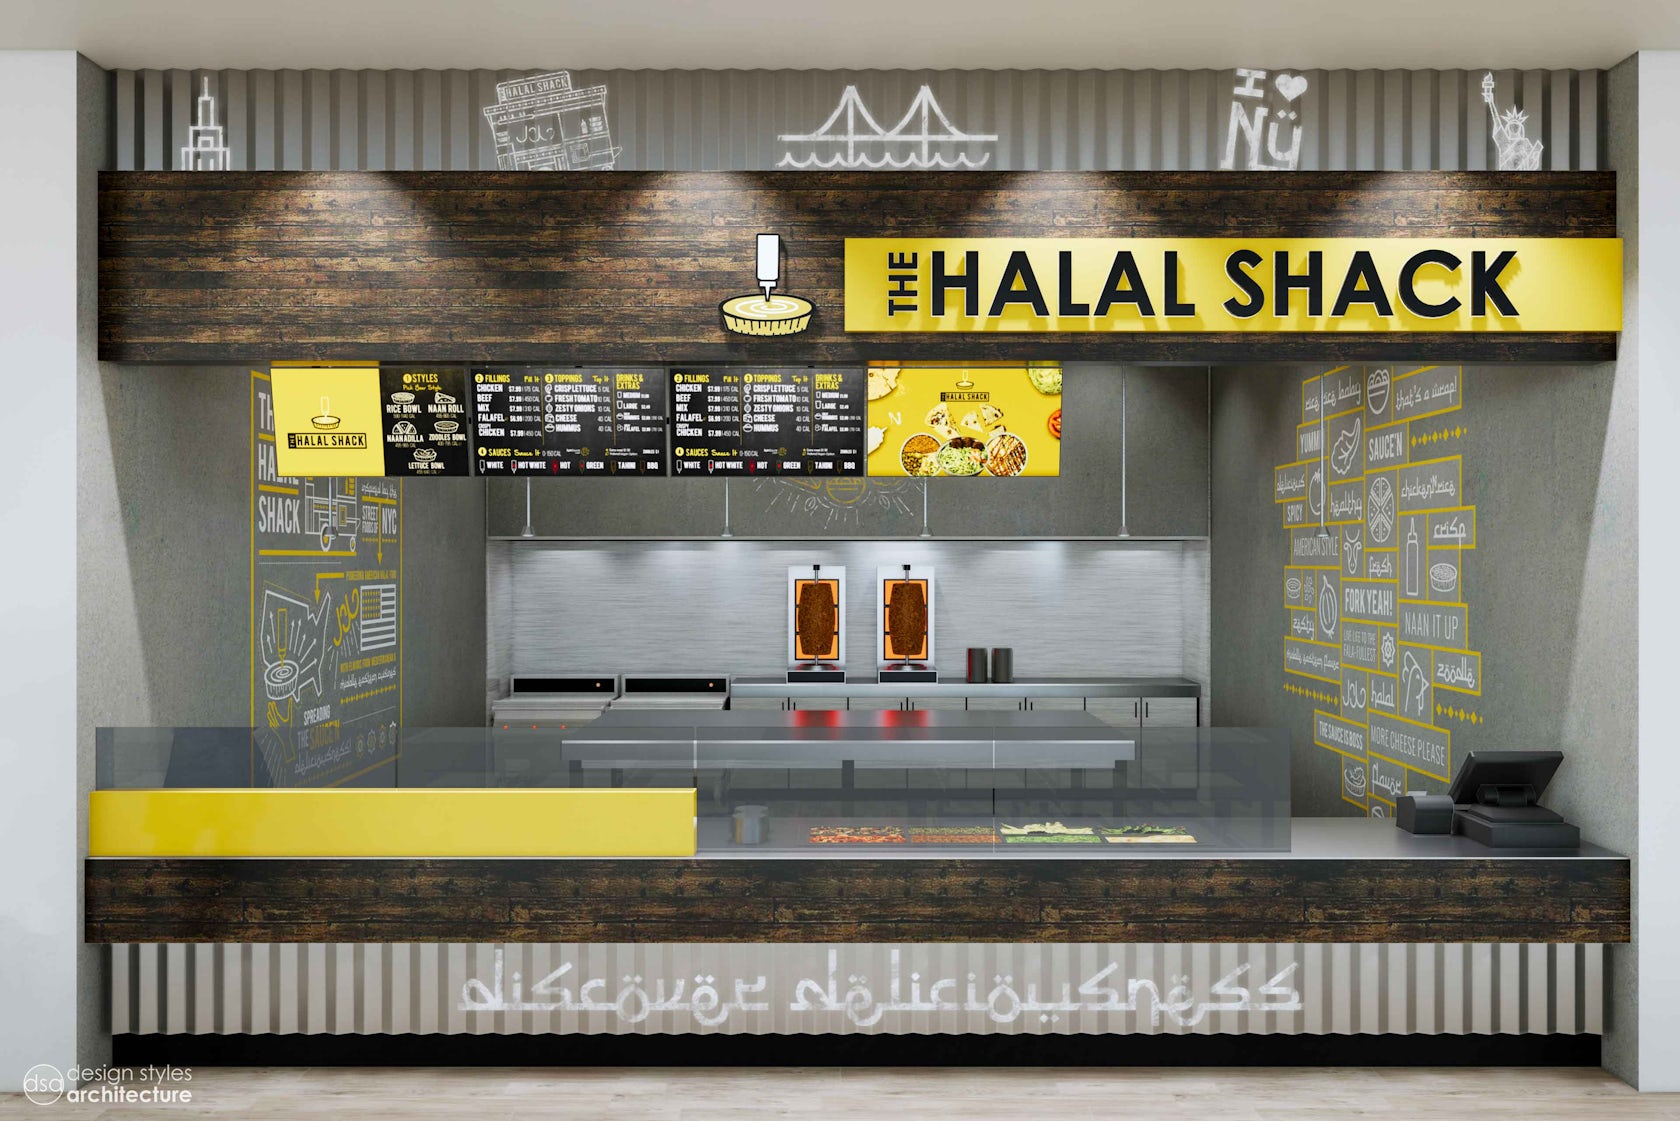 The Halal Shack